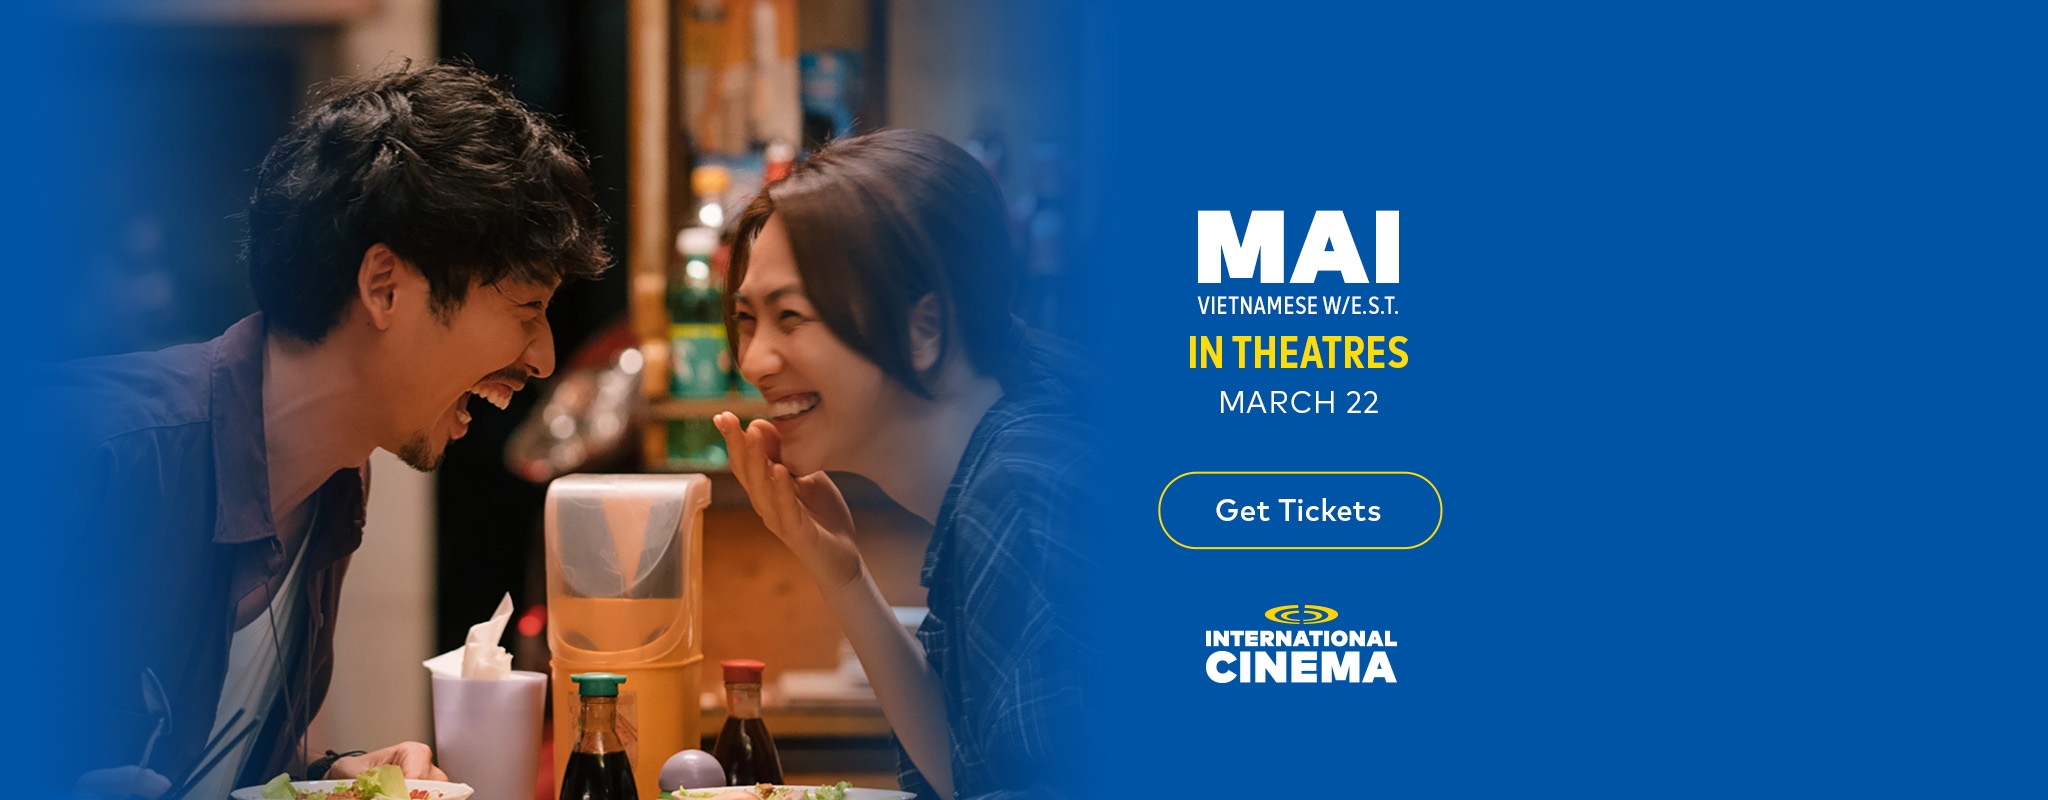 Mai (Vietnamese w/e.s.t.) - In theatres March 22 - Get Tickets